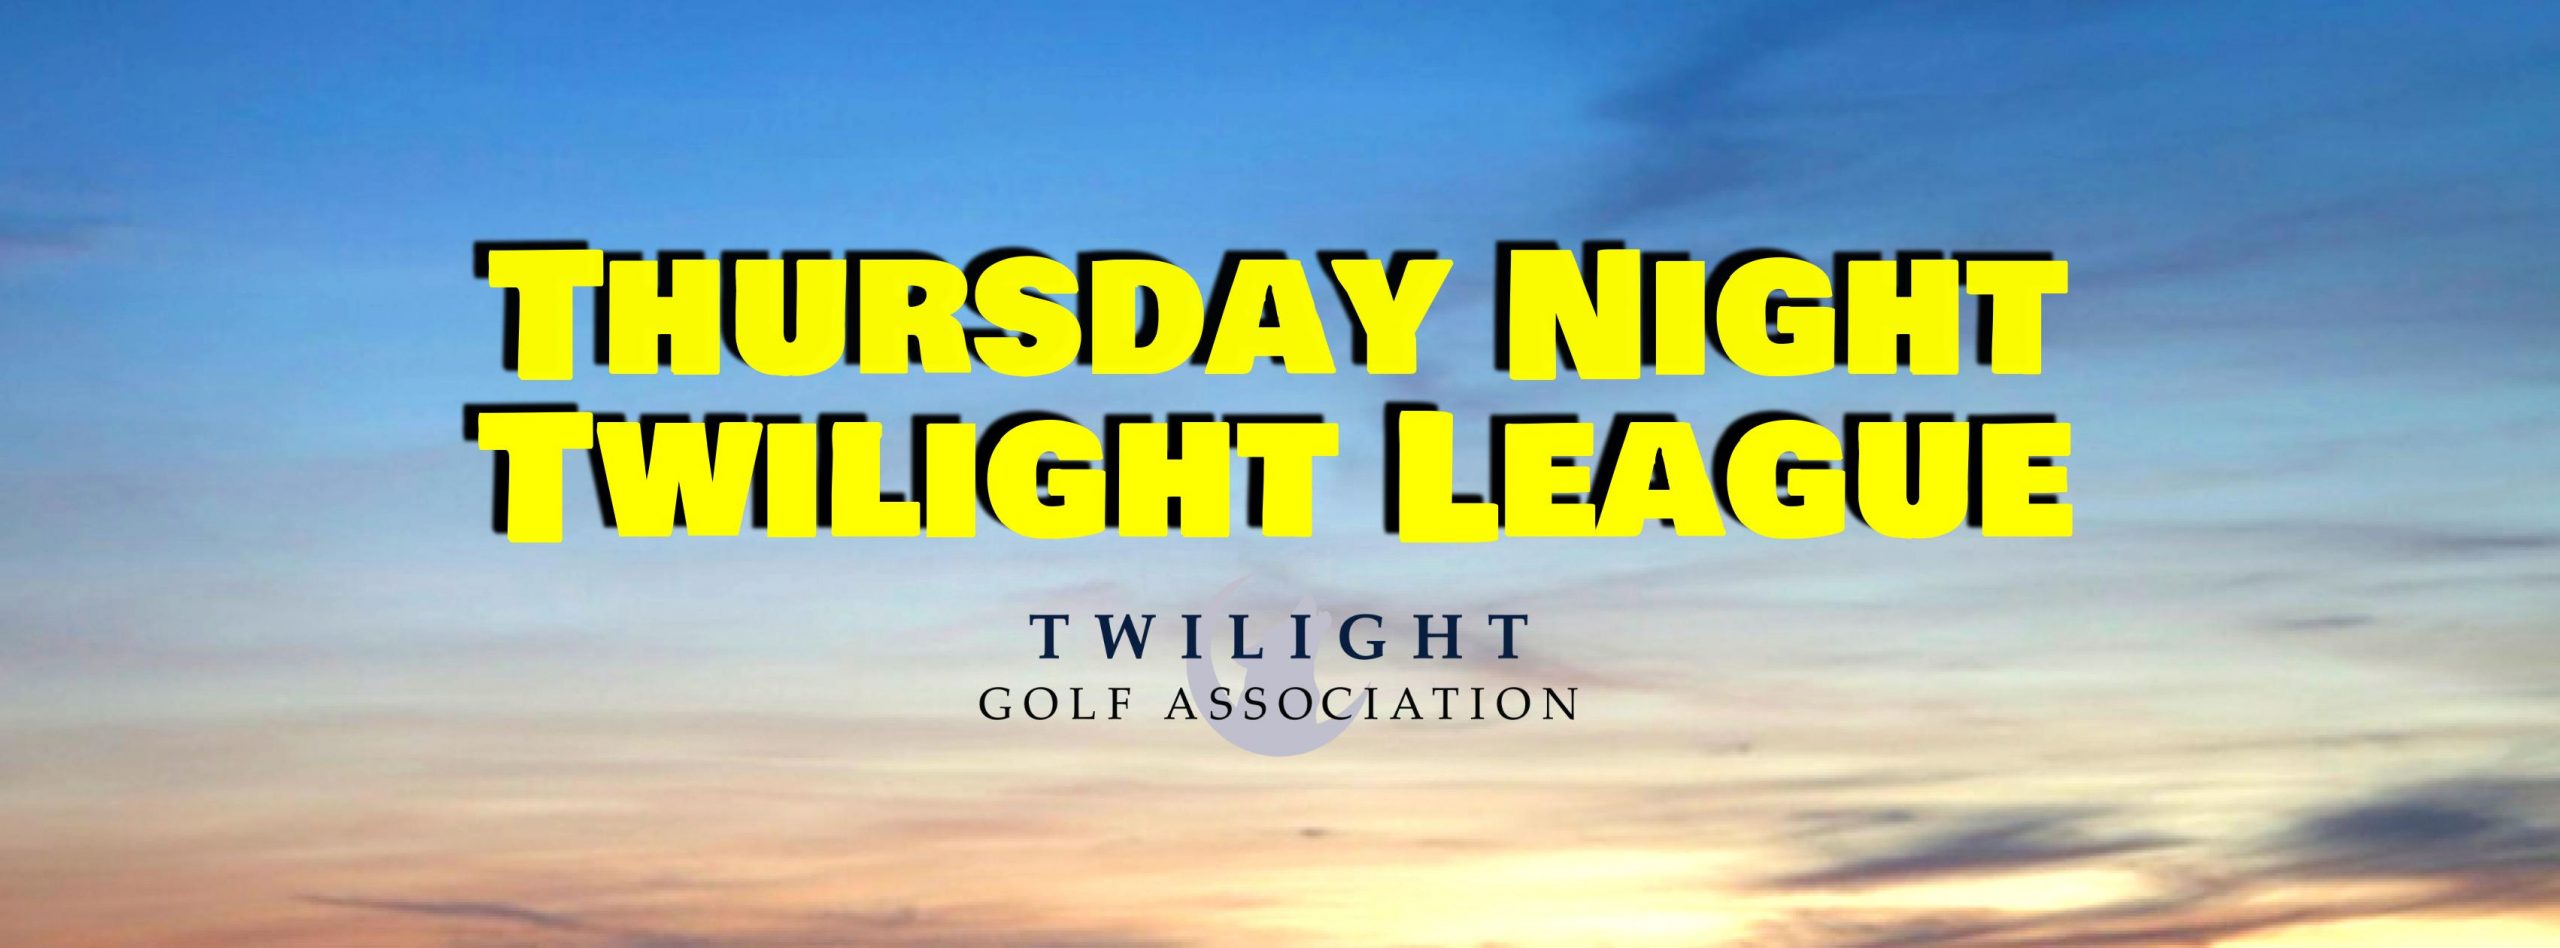 Thursday Night Twilight League at Rancocas Golf Club